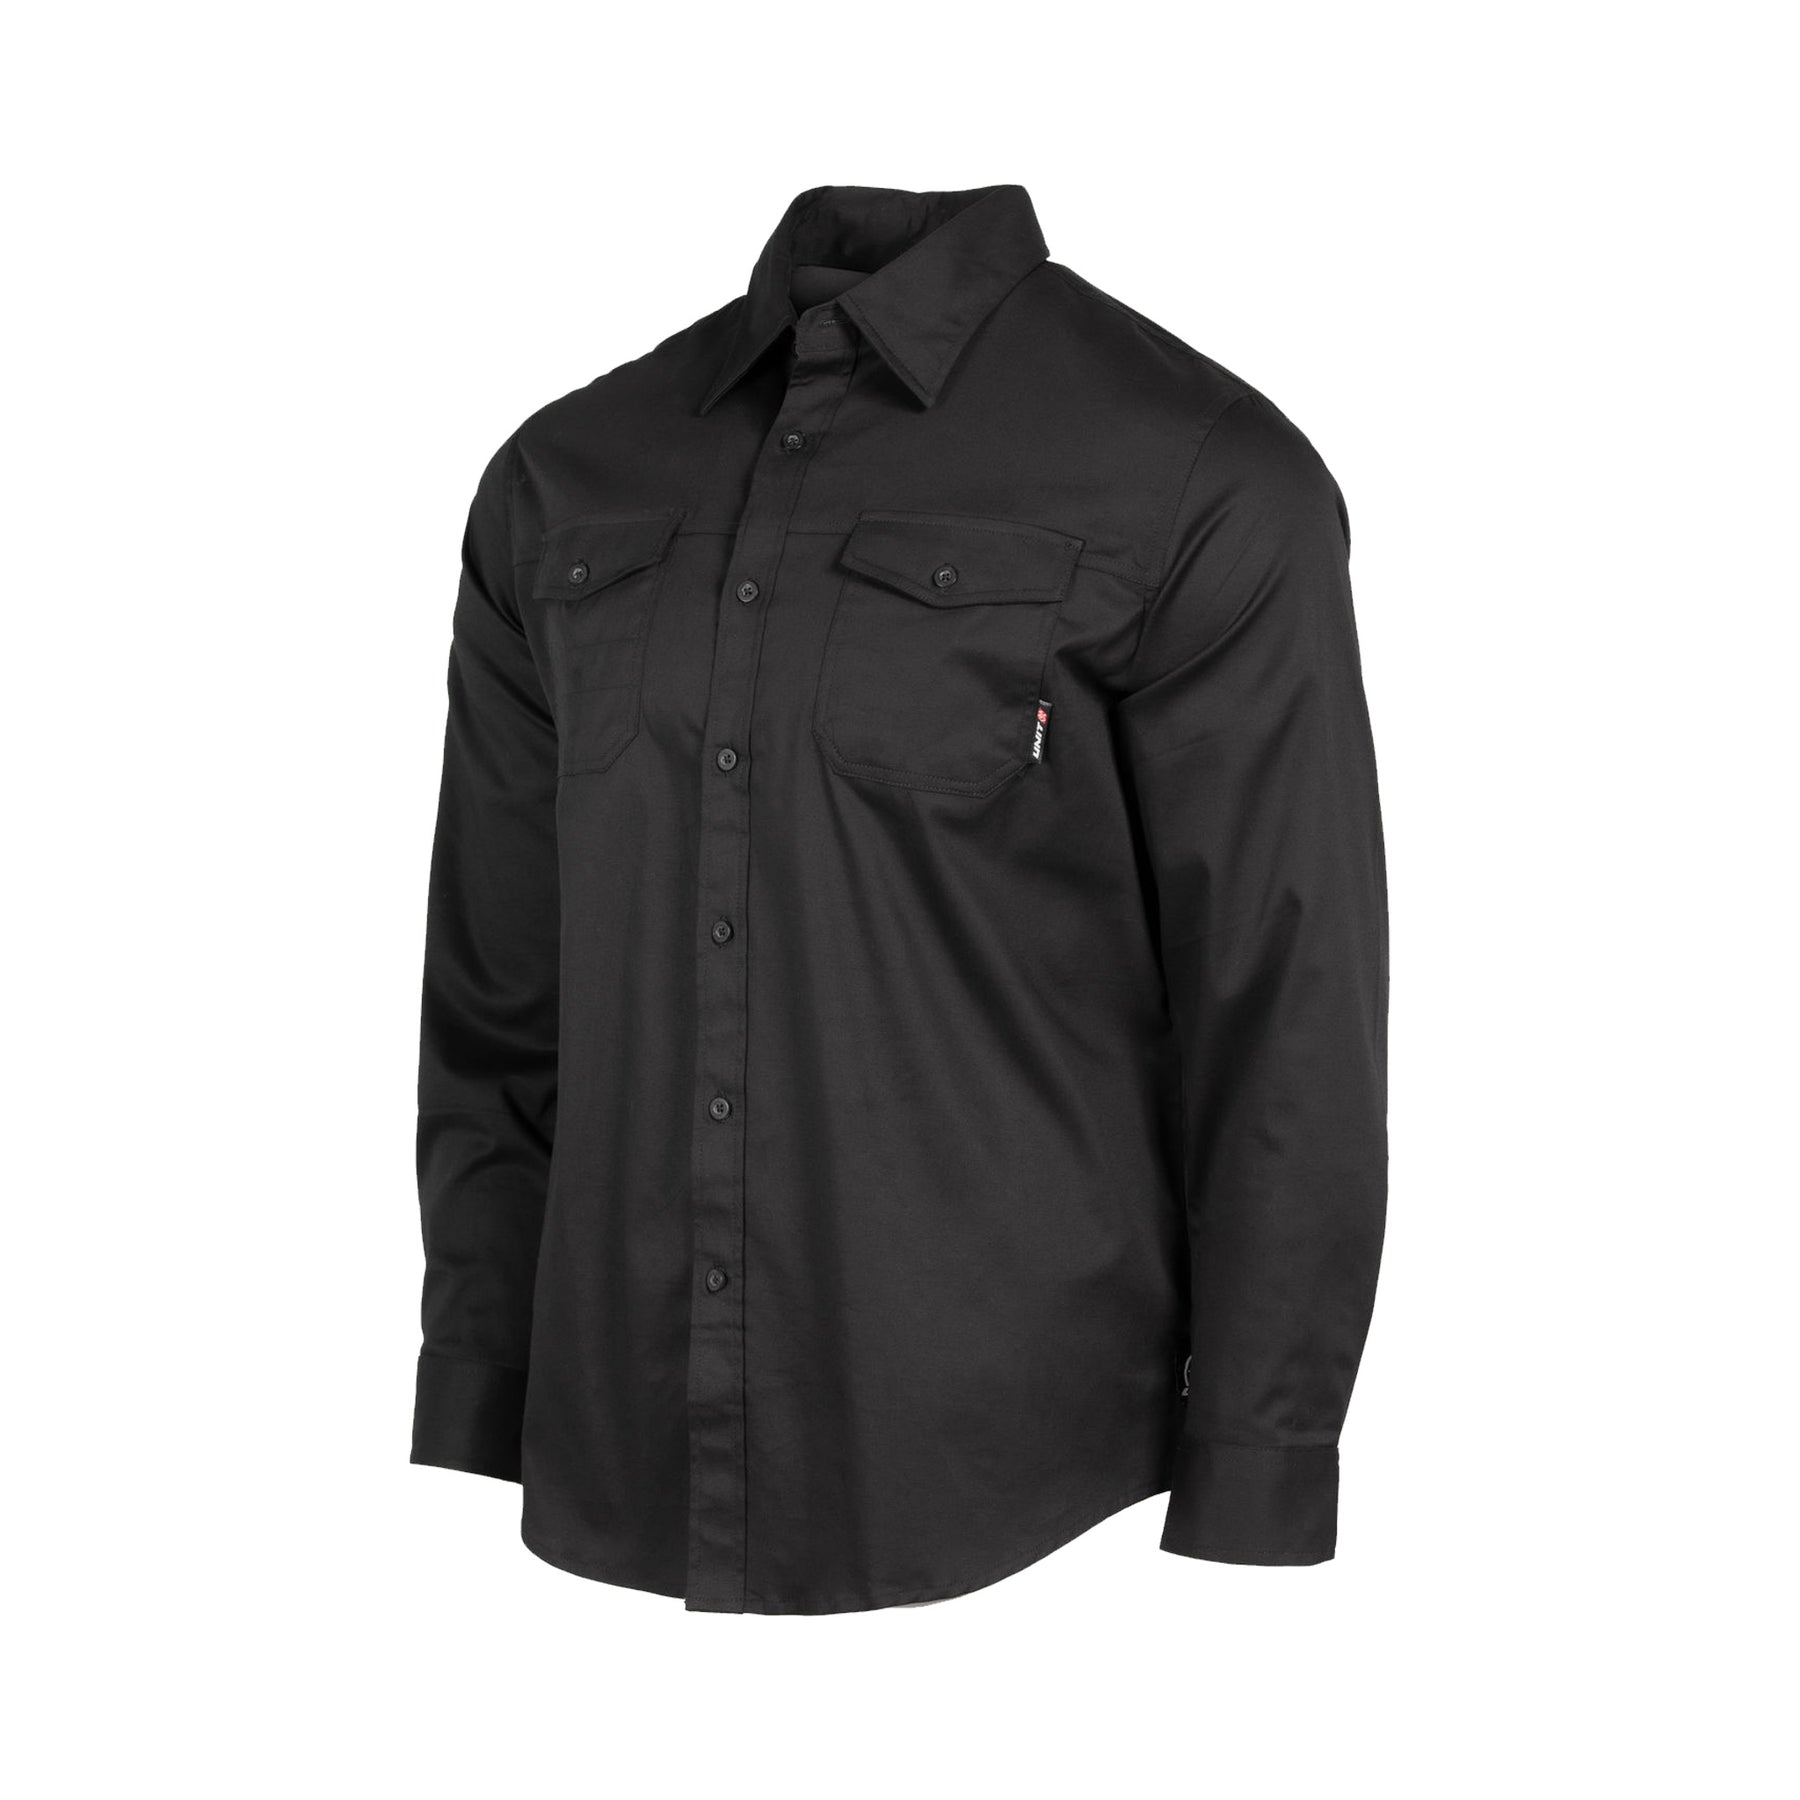 craftman long sleeve shirt in black